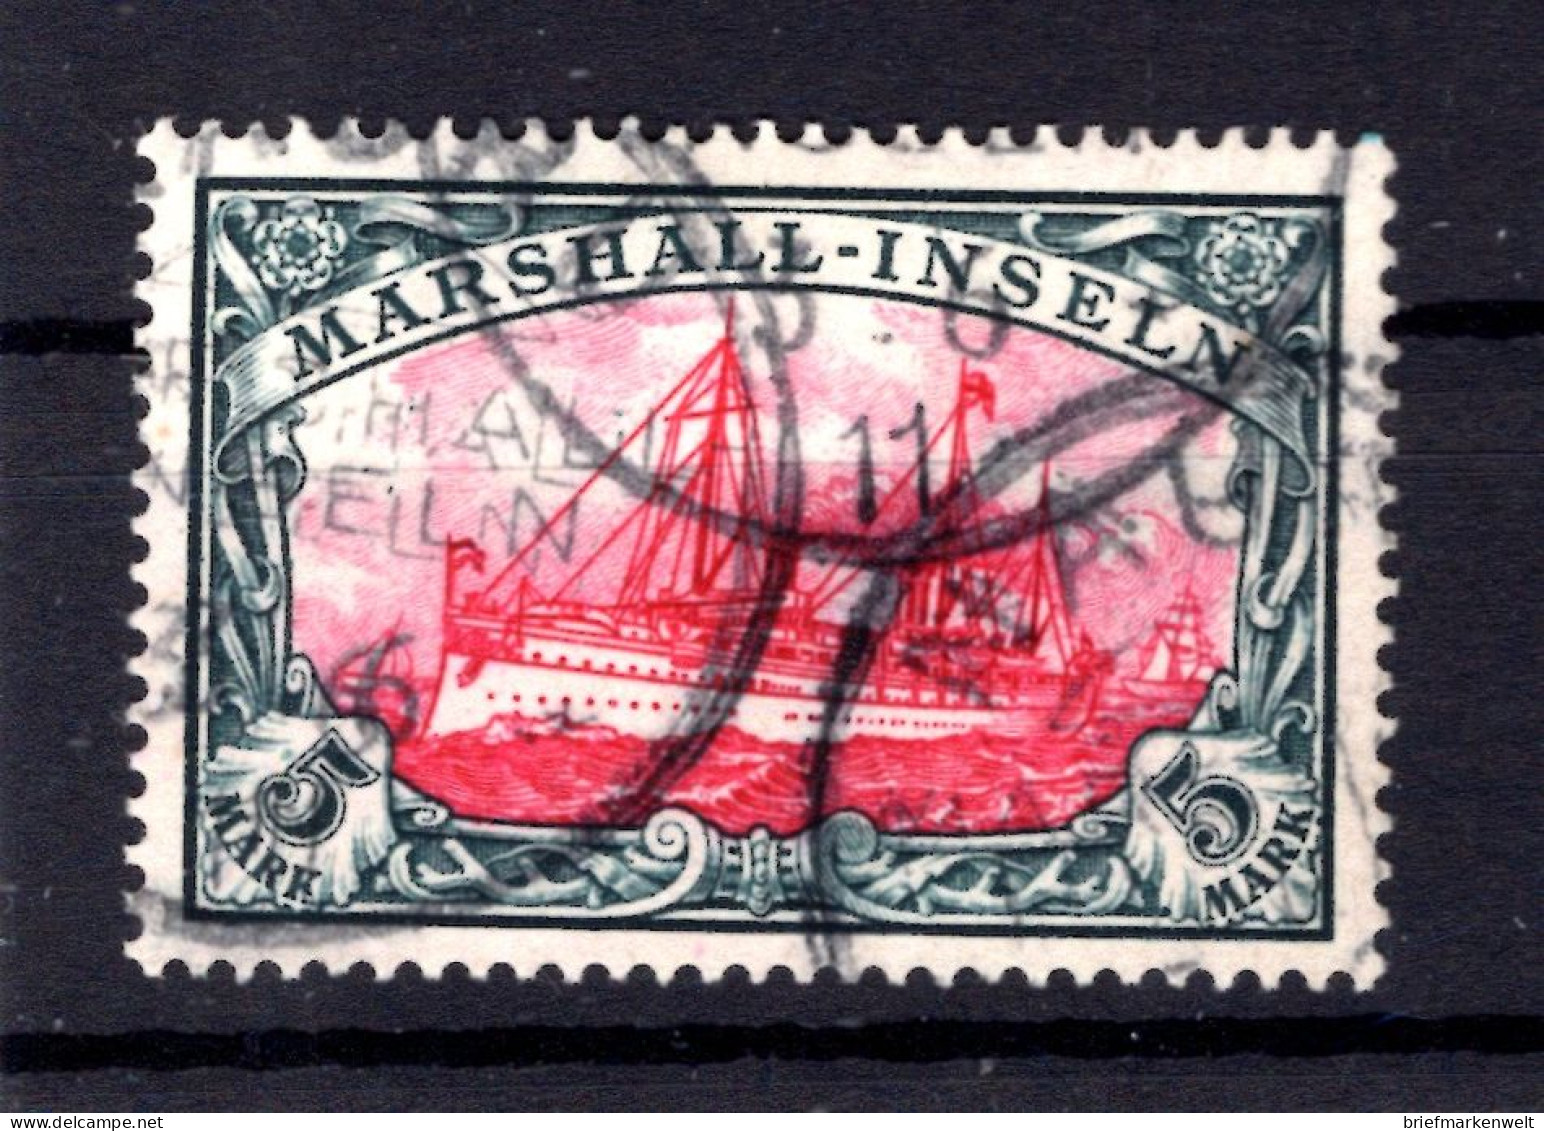 Marshall-I. 25 Tadellos Gest. 600EUR (T5342 - Marshall-Inseln